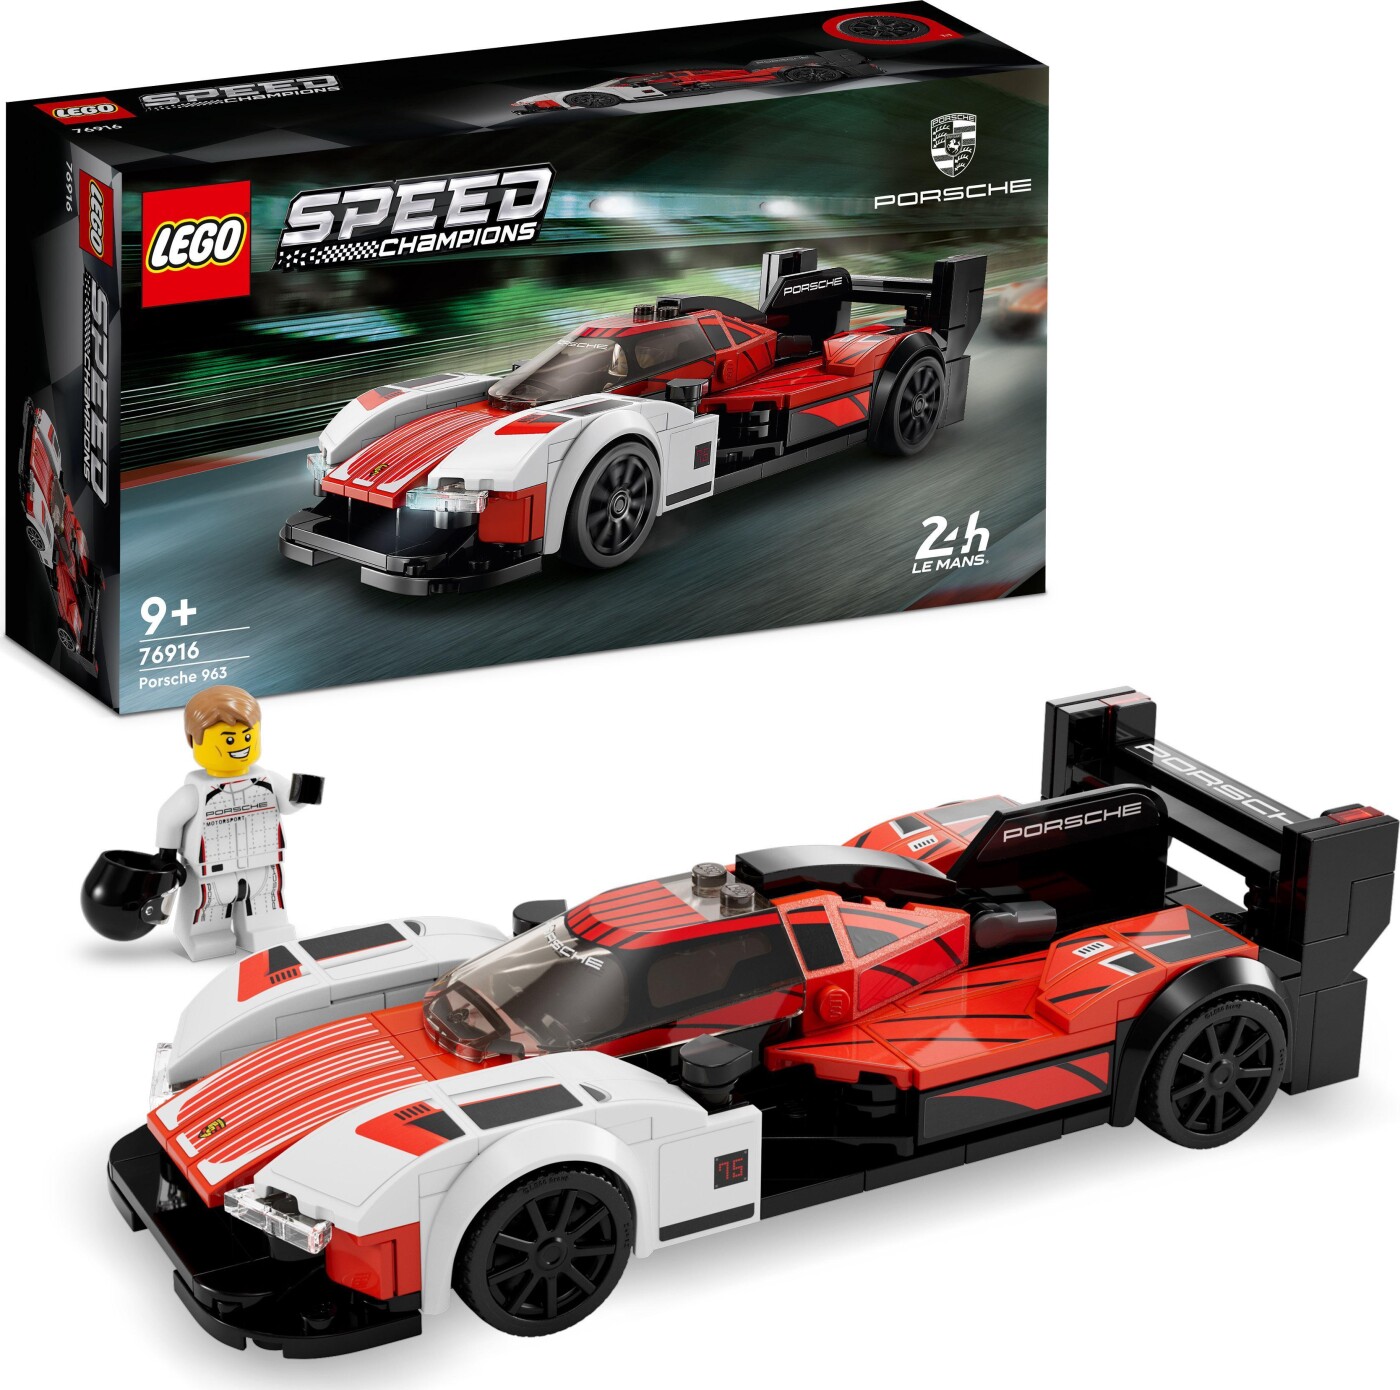 Billede af Lego Speed Champions - Porsche 963 - 76916